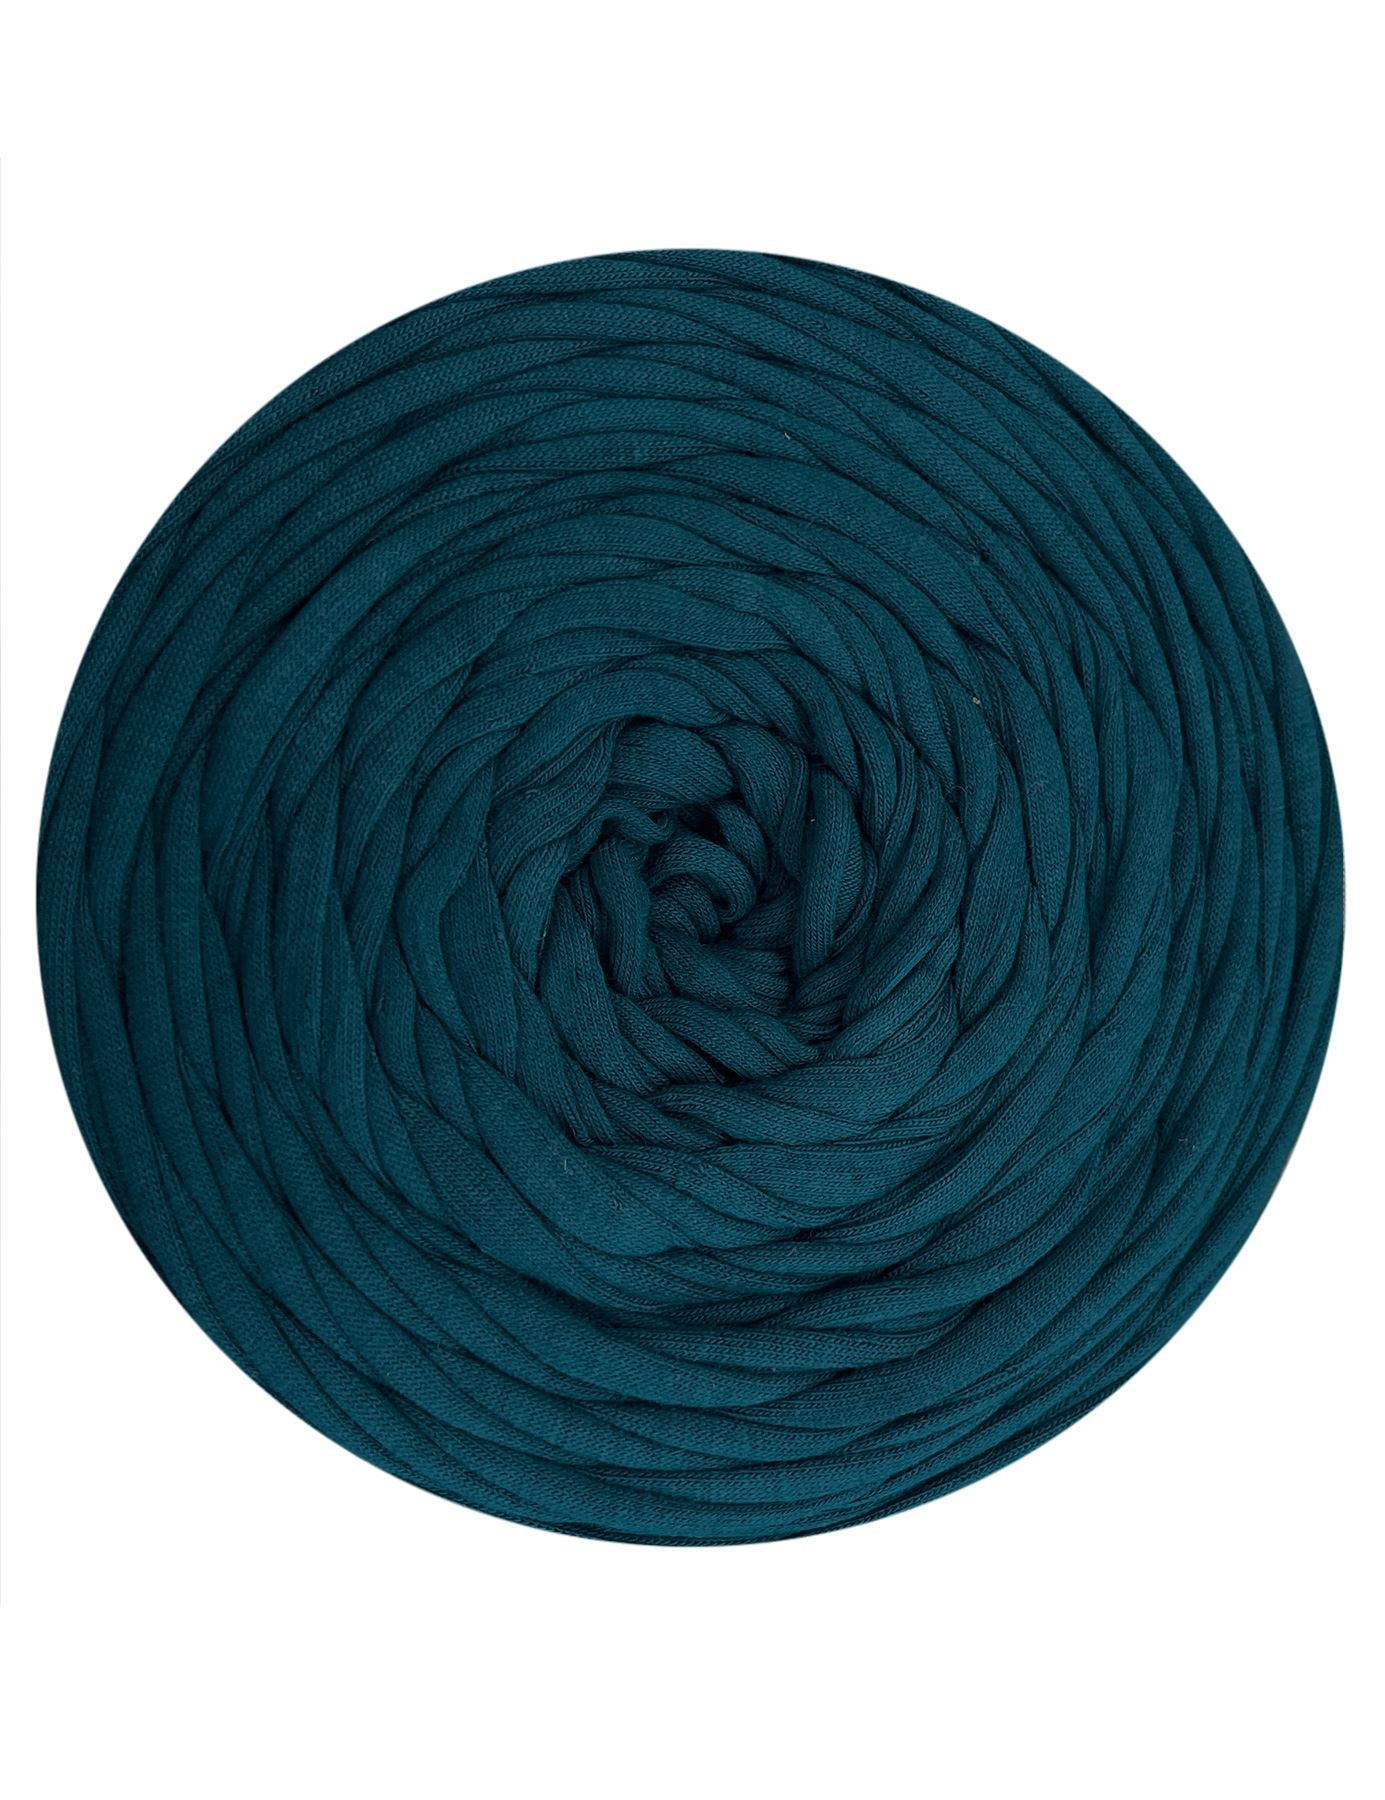 Dark teal t-shirt yarn (100-120m)